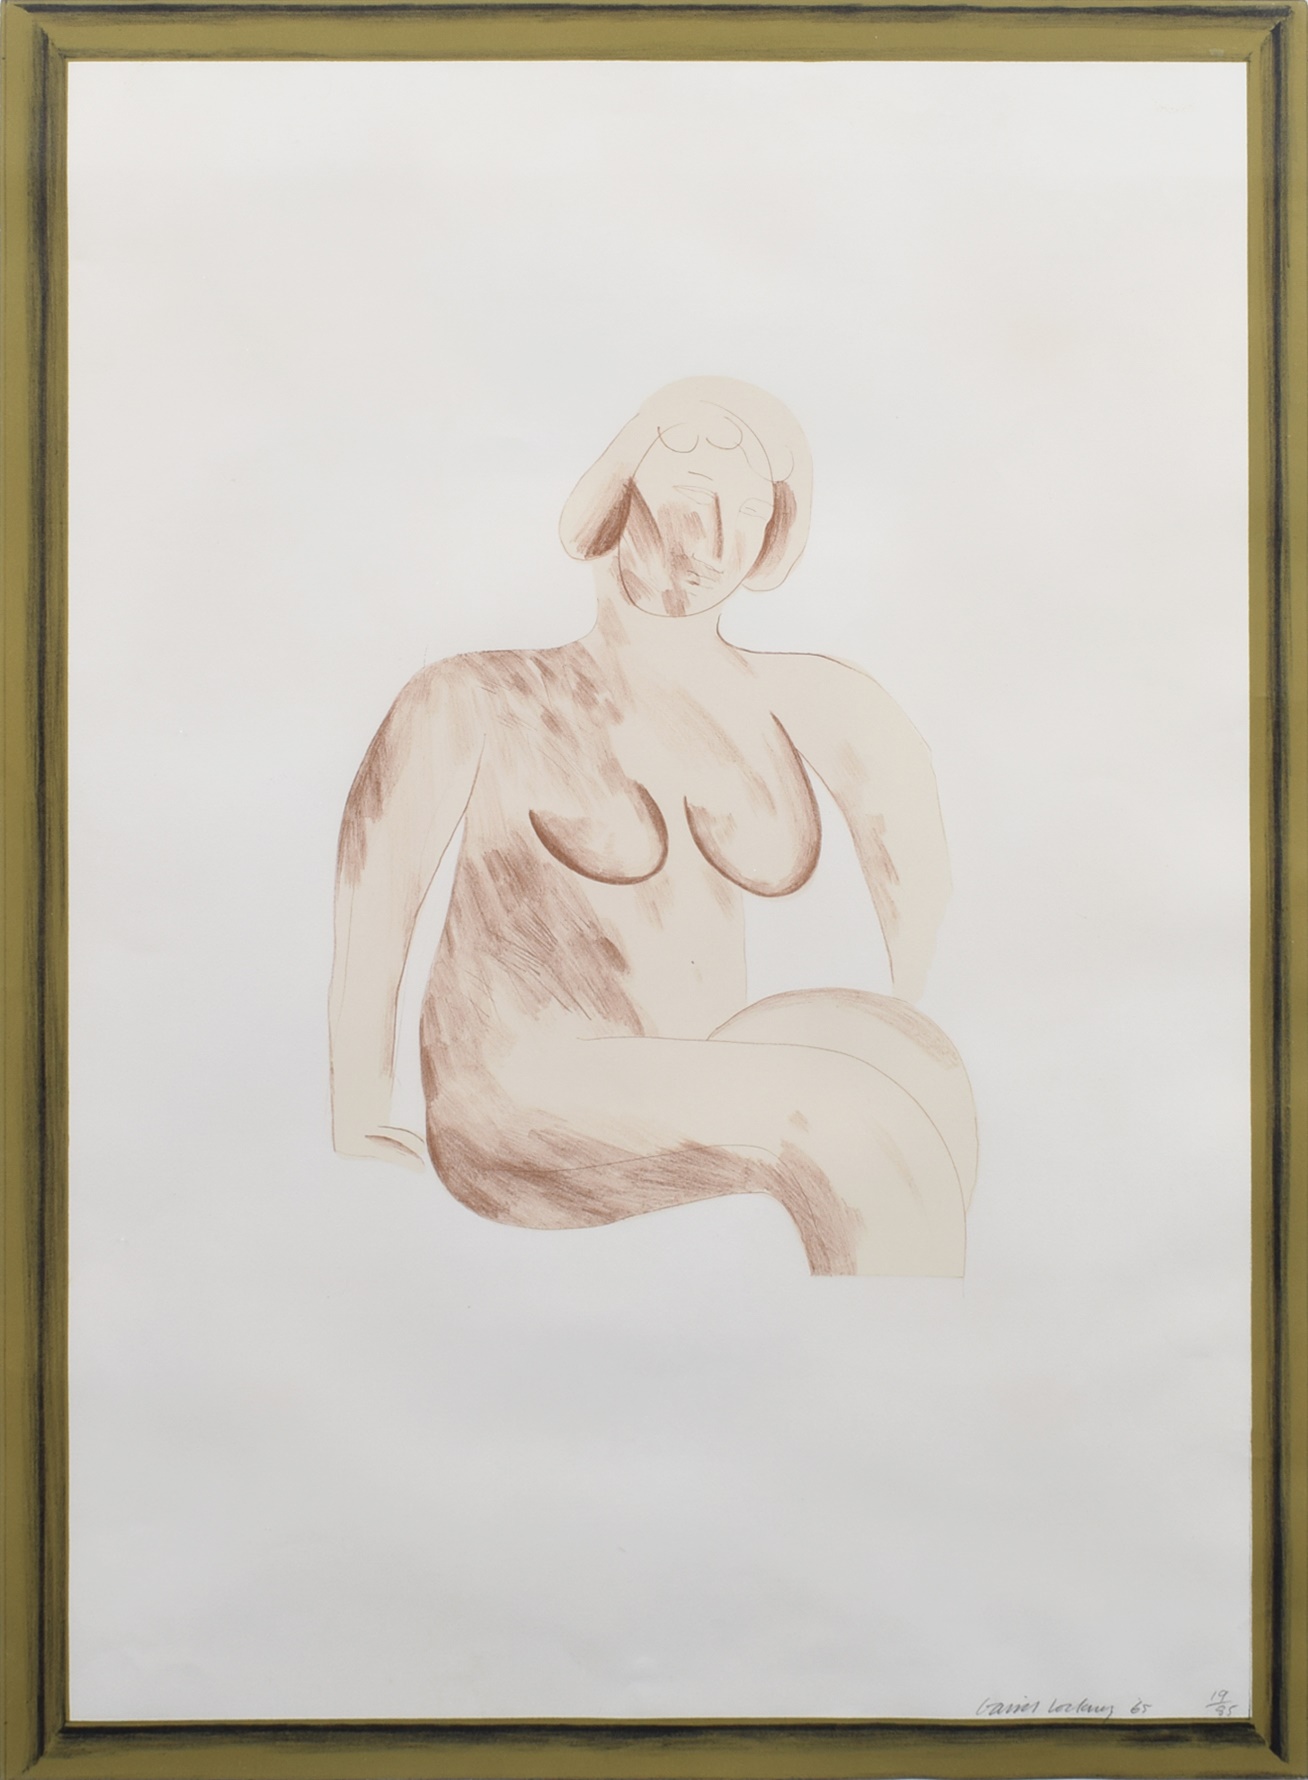 Desnudo Drawing Auction